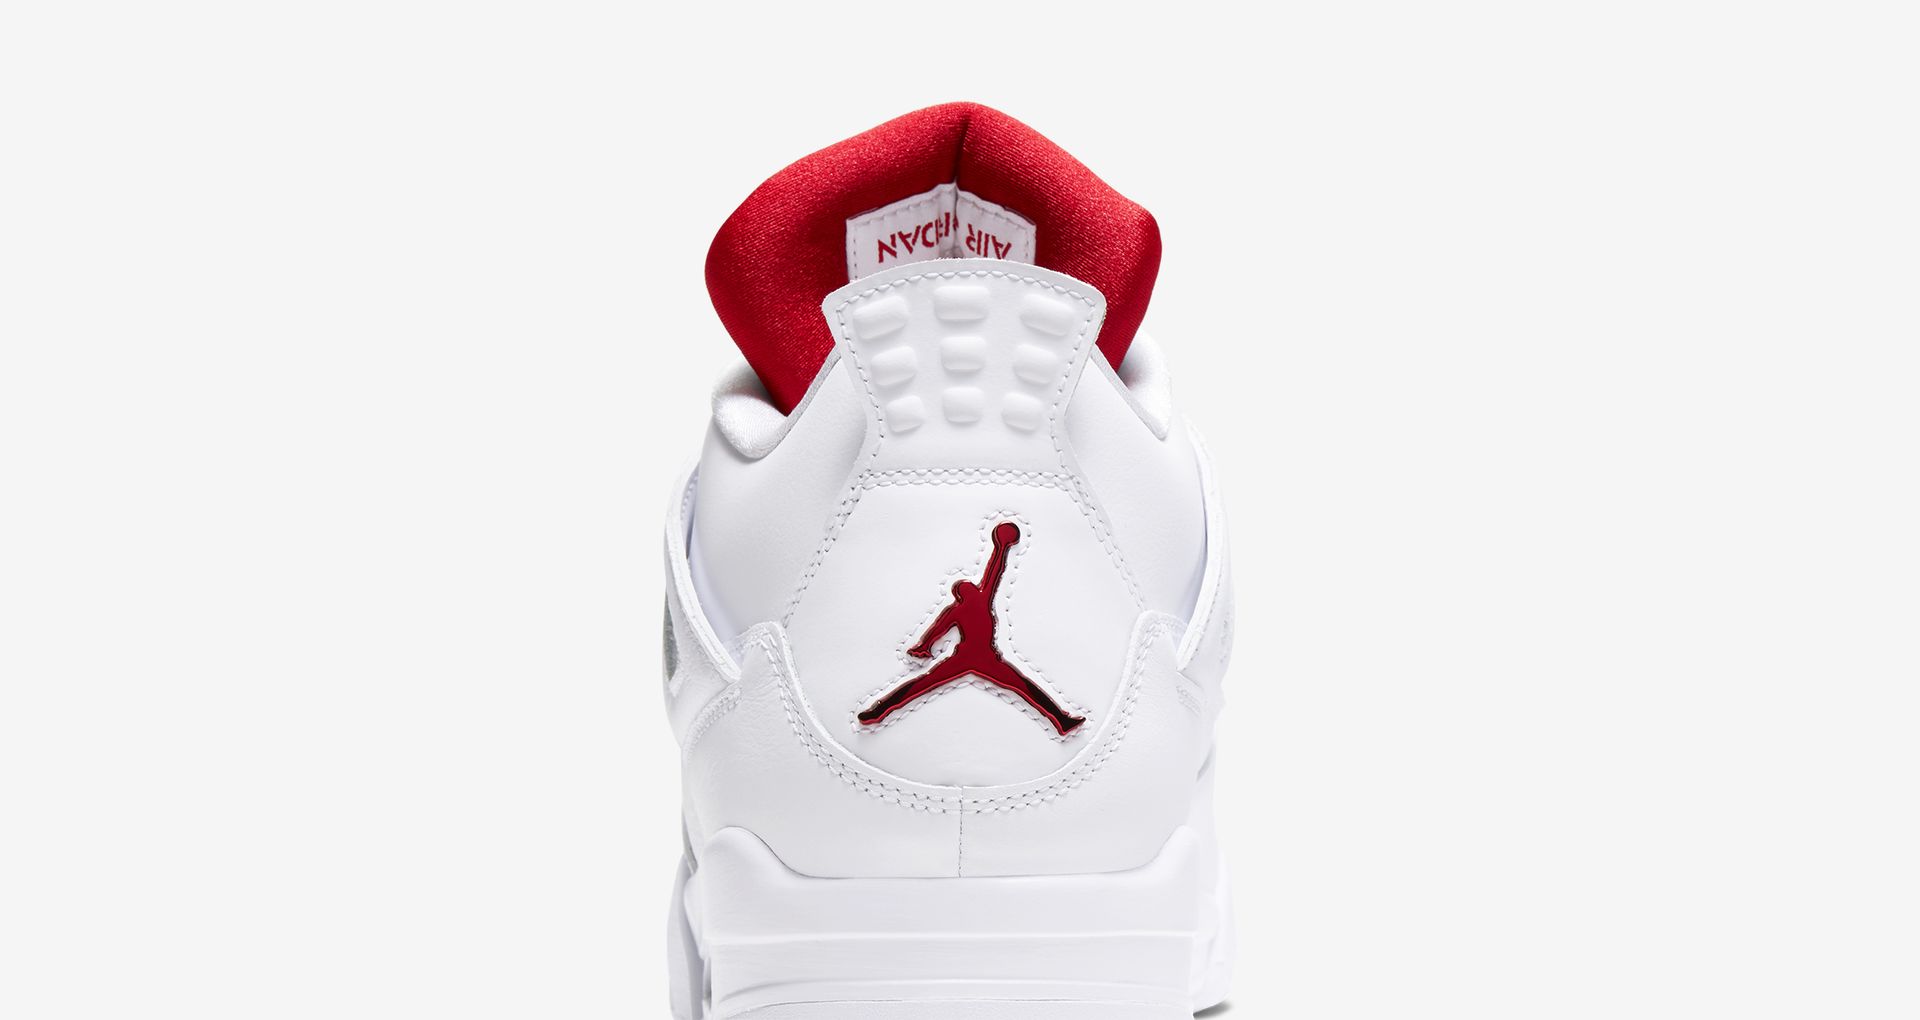 Nike Jordan Retro 4 